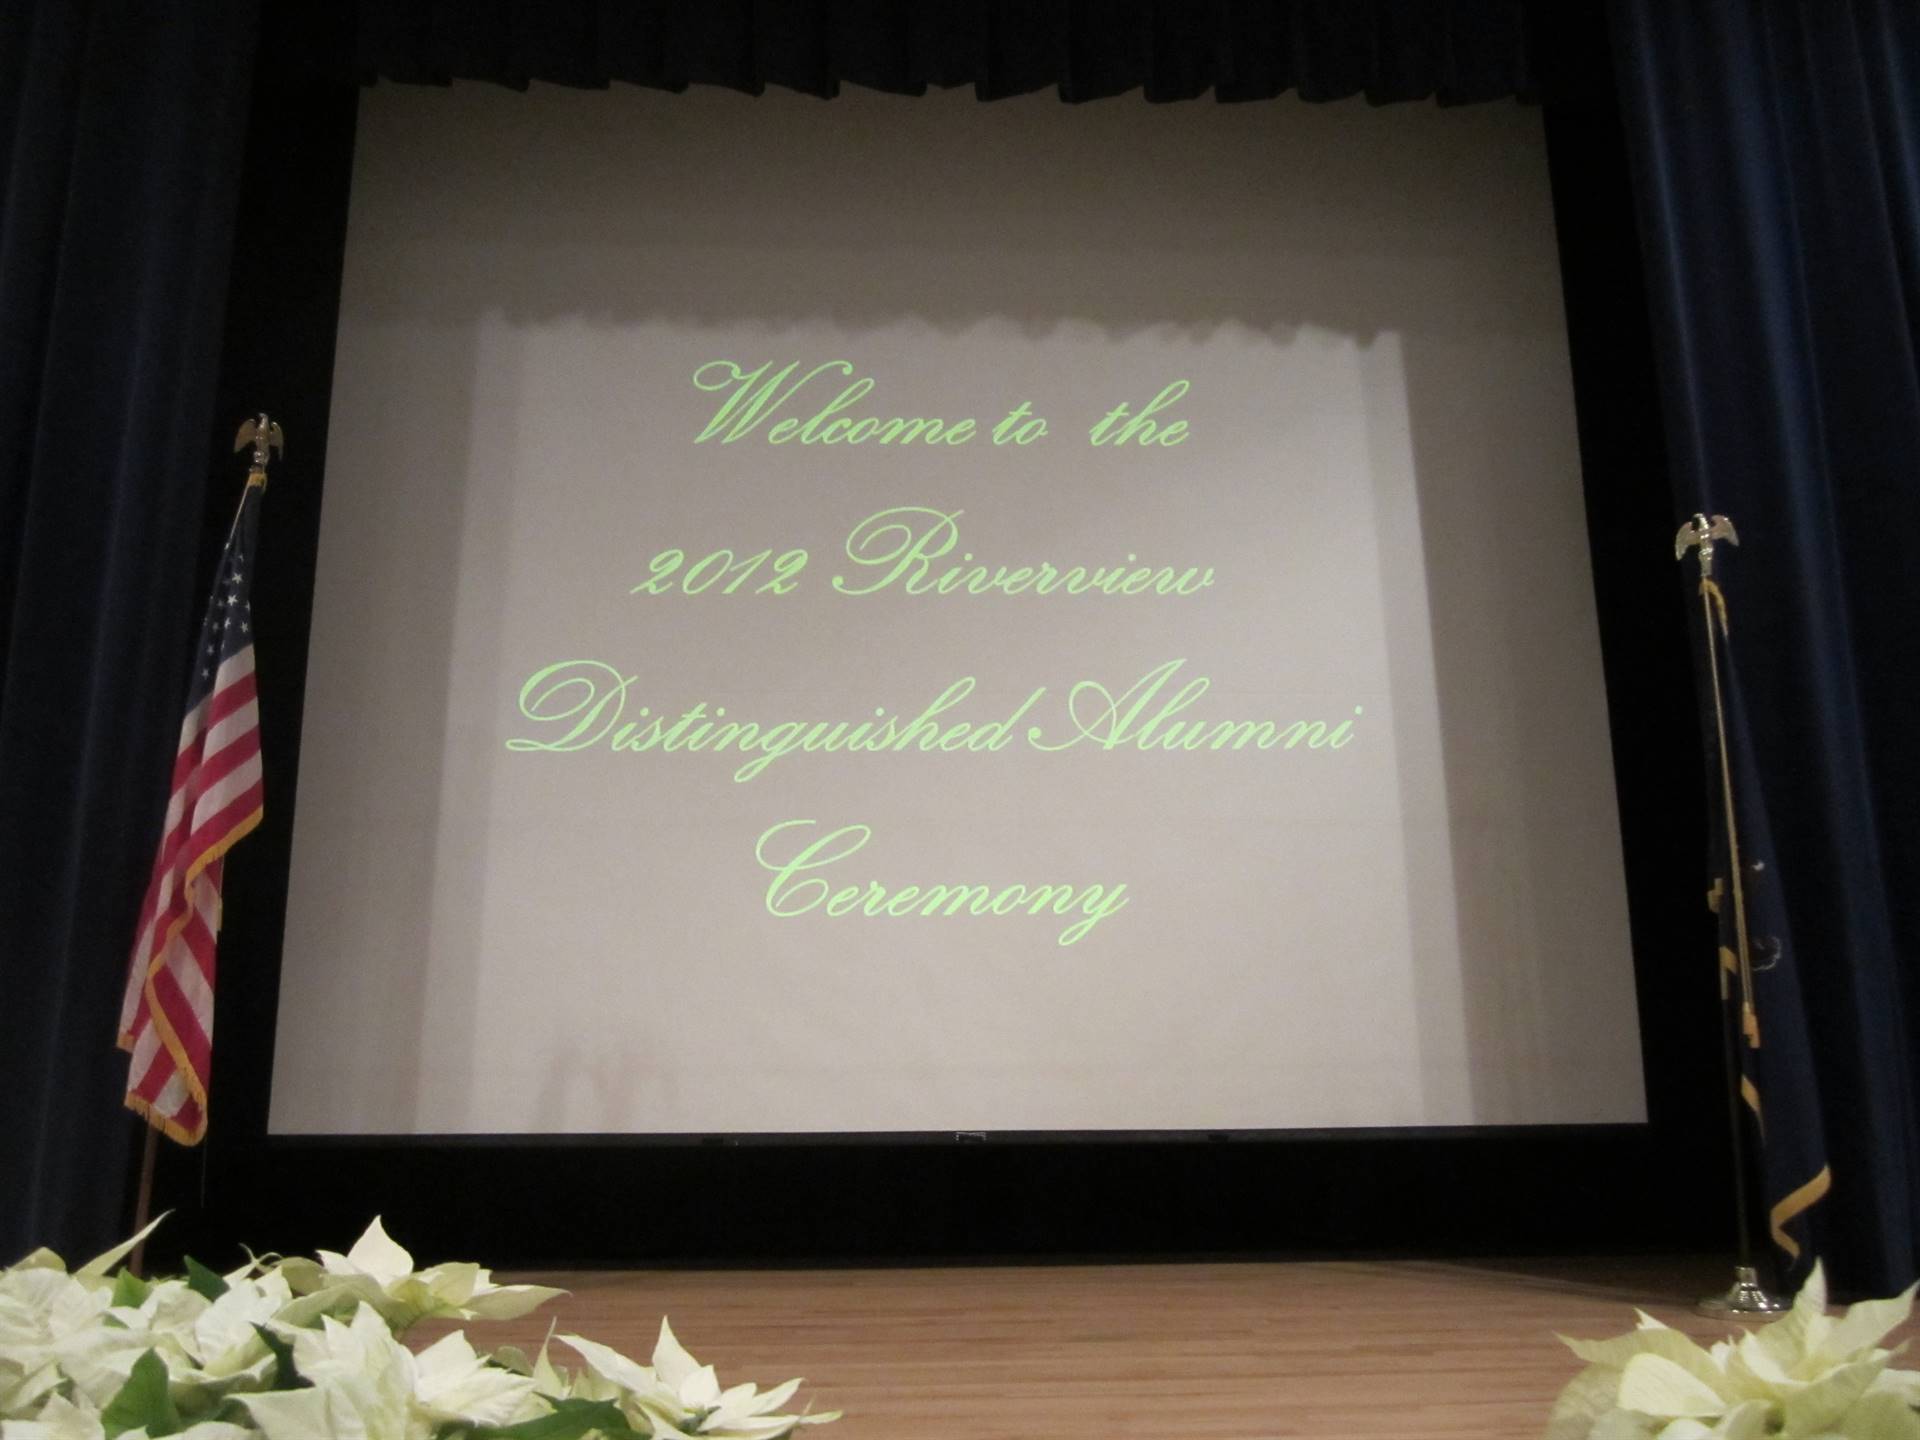 2012 Distinguished Alumni Event